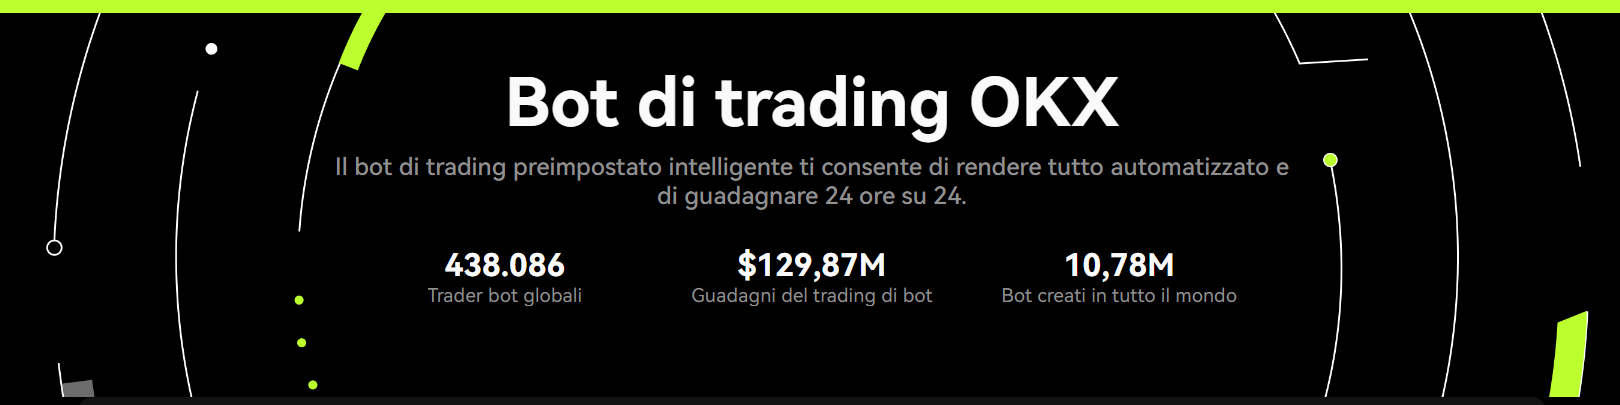 OKX Trading Bot